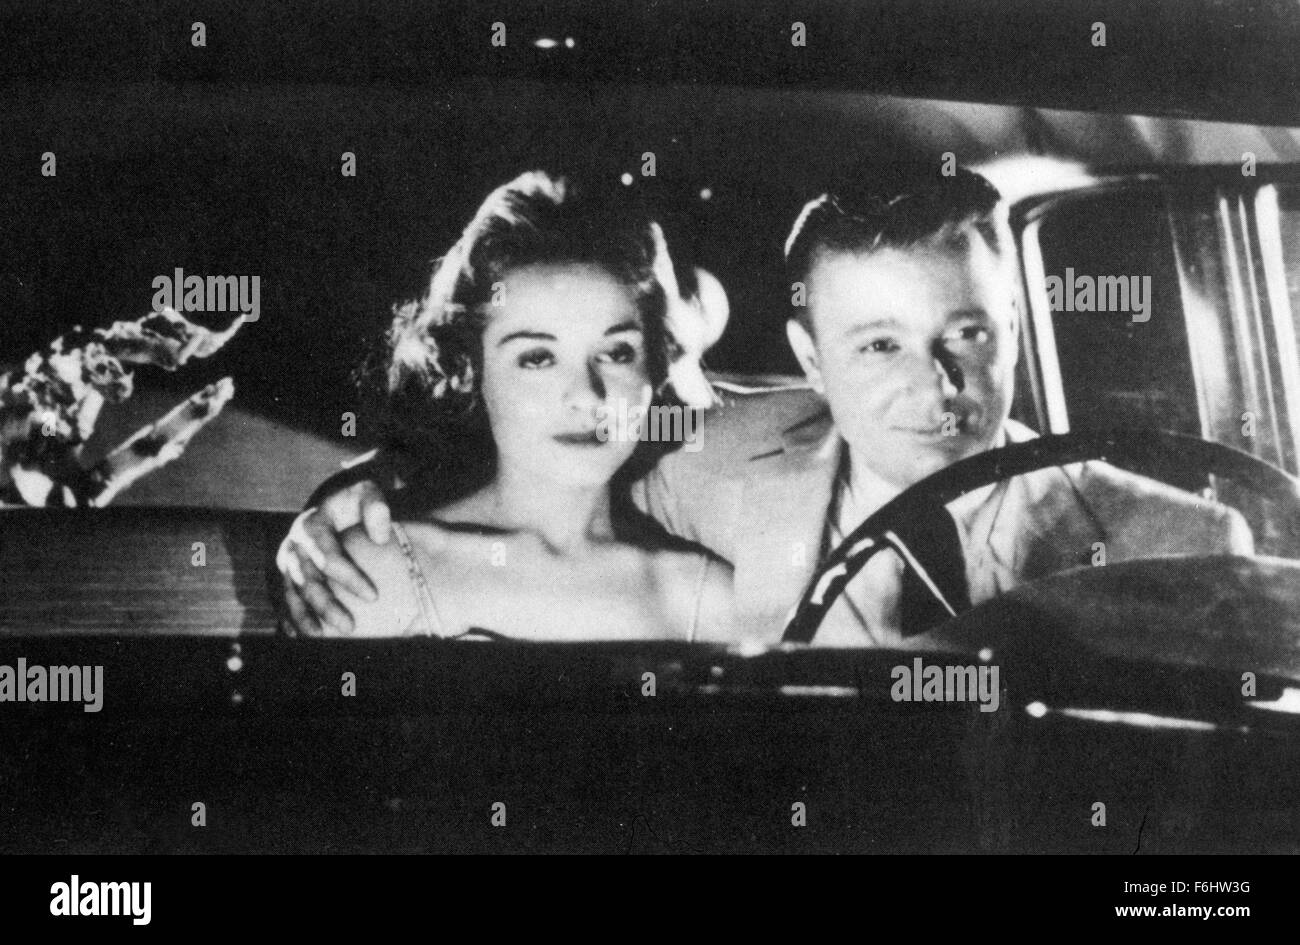 1957, Filmtitel: INVASION der Untertasse Männer, Regie: EDWARD L CAHN, Studio: AIP, abgebildet: EDWARD L CAHN, GLORIA CASTILLO. (Bild Kredit: SNAP) Stockfoto